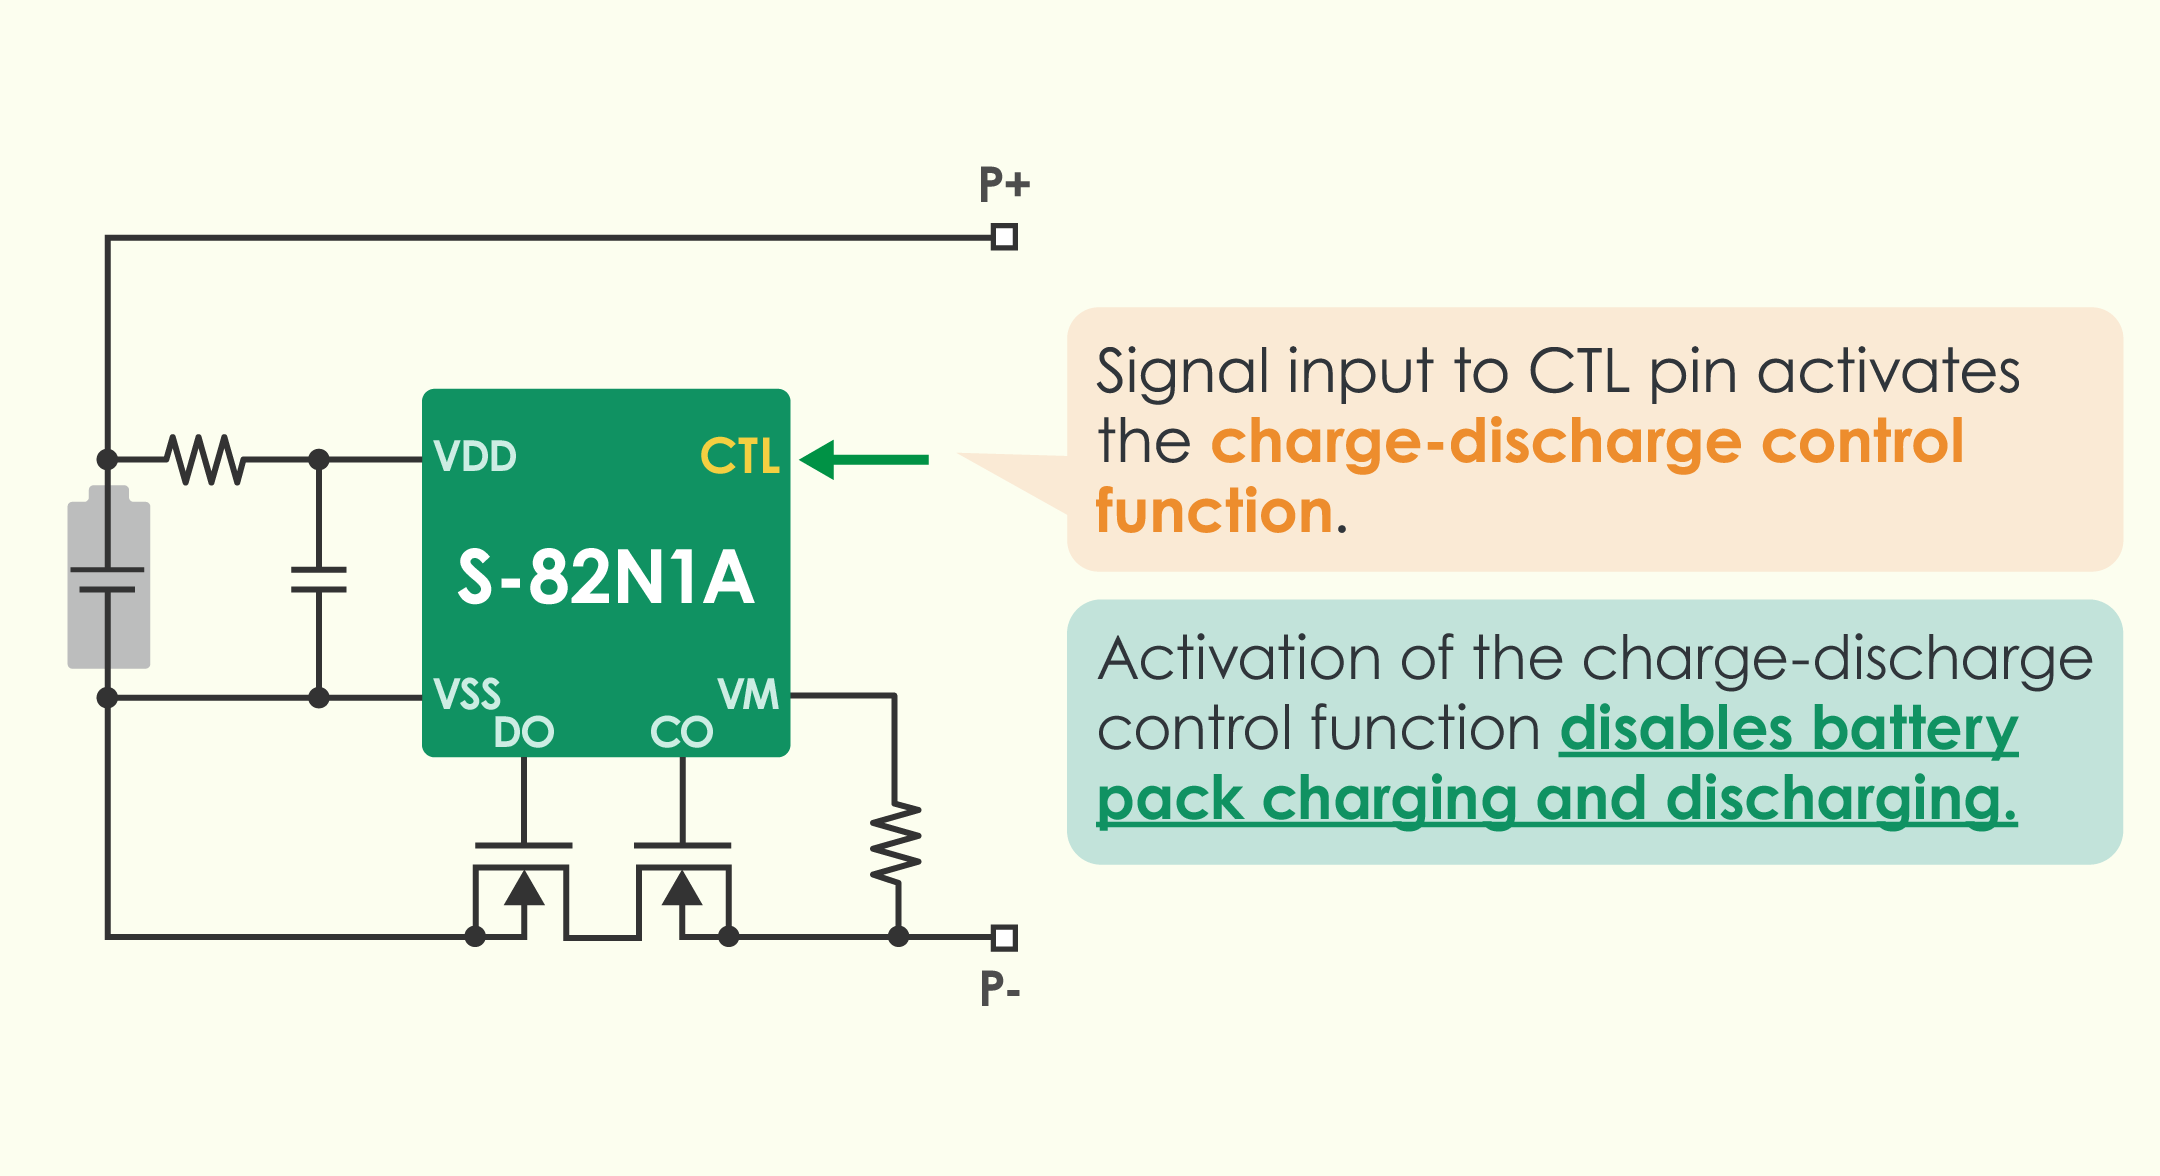 Circuit diagram of S-82N1A